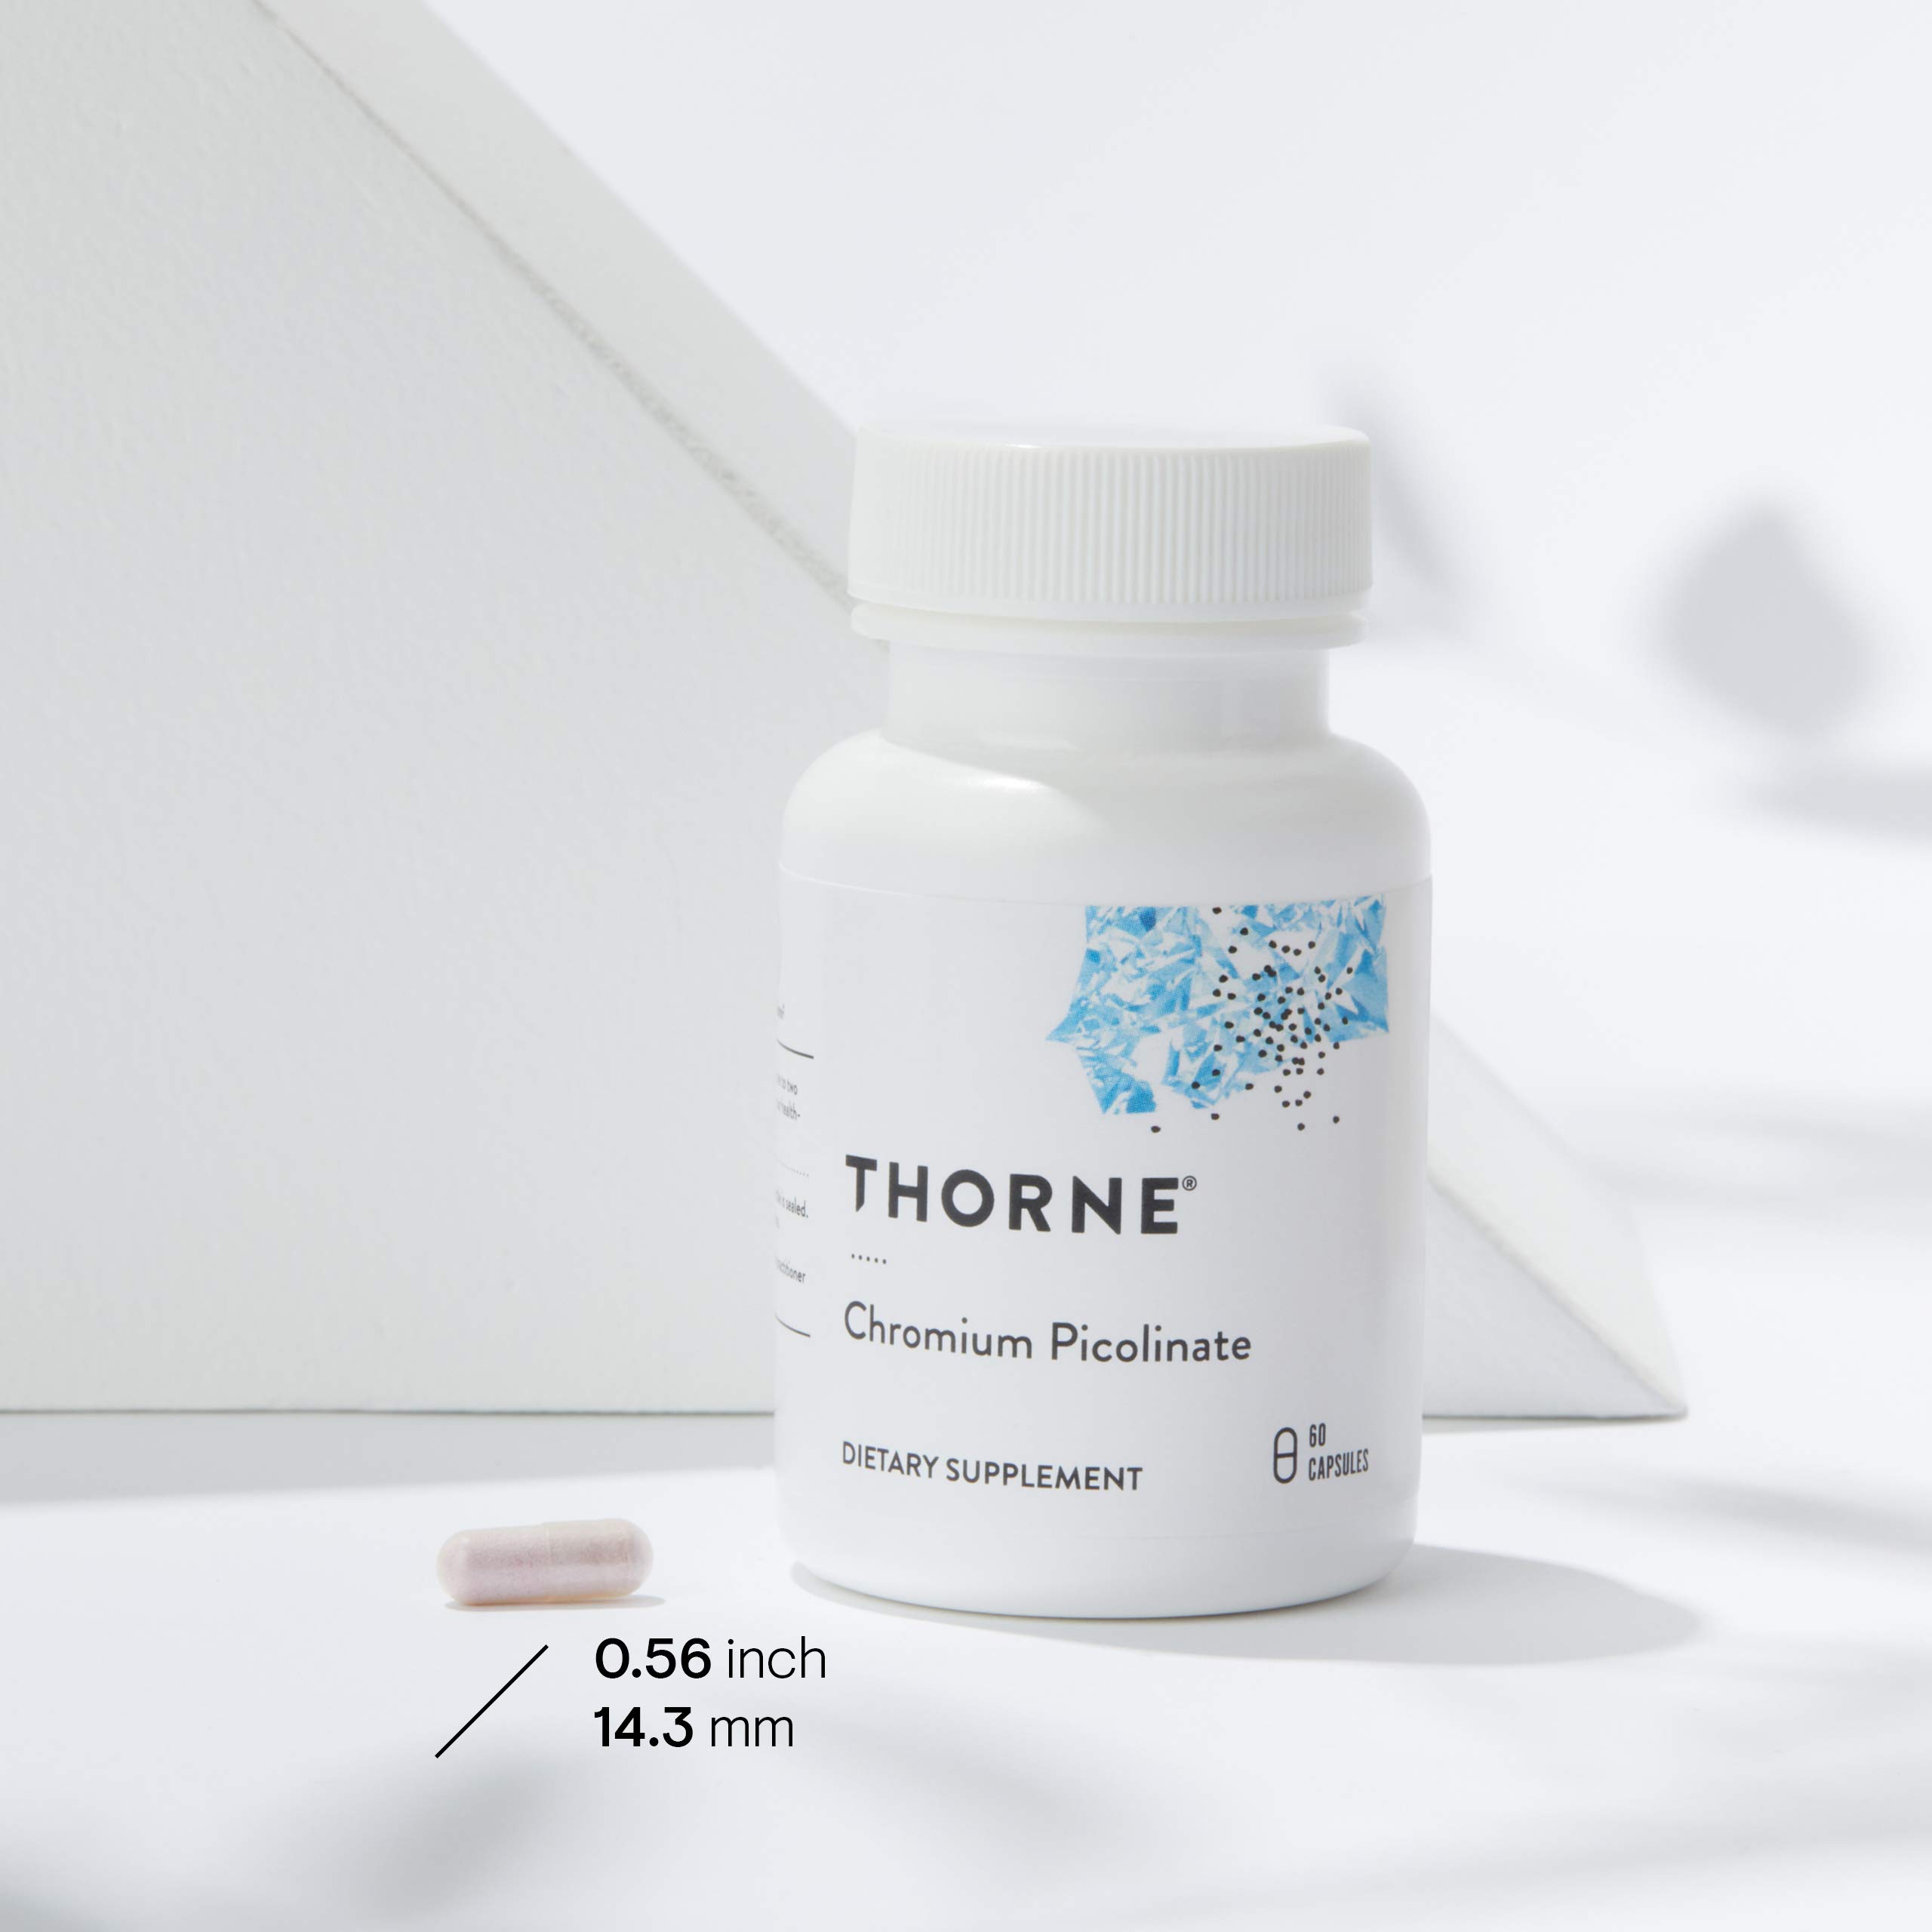 Thorne Metabolic Support Bundle: Berberine and Chromium Picolinate for Balanced Wellness